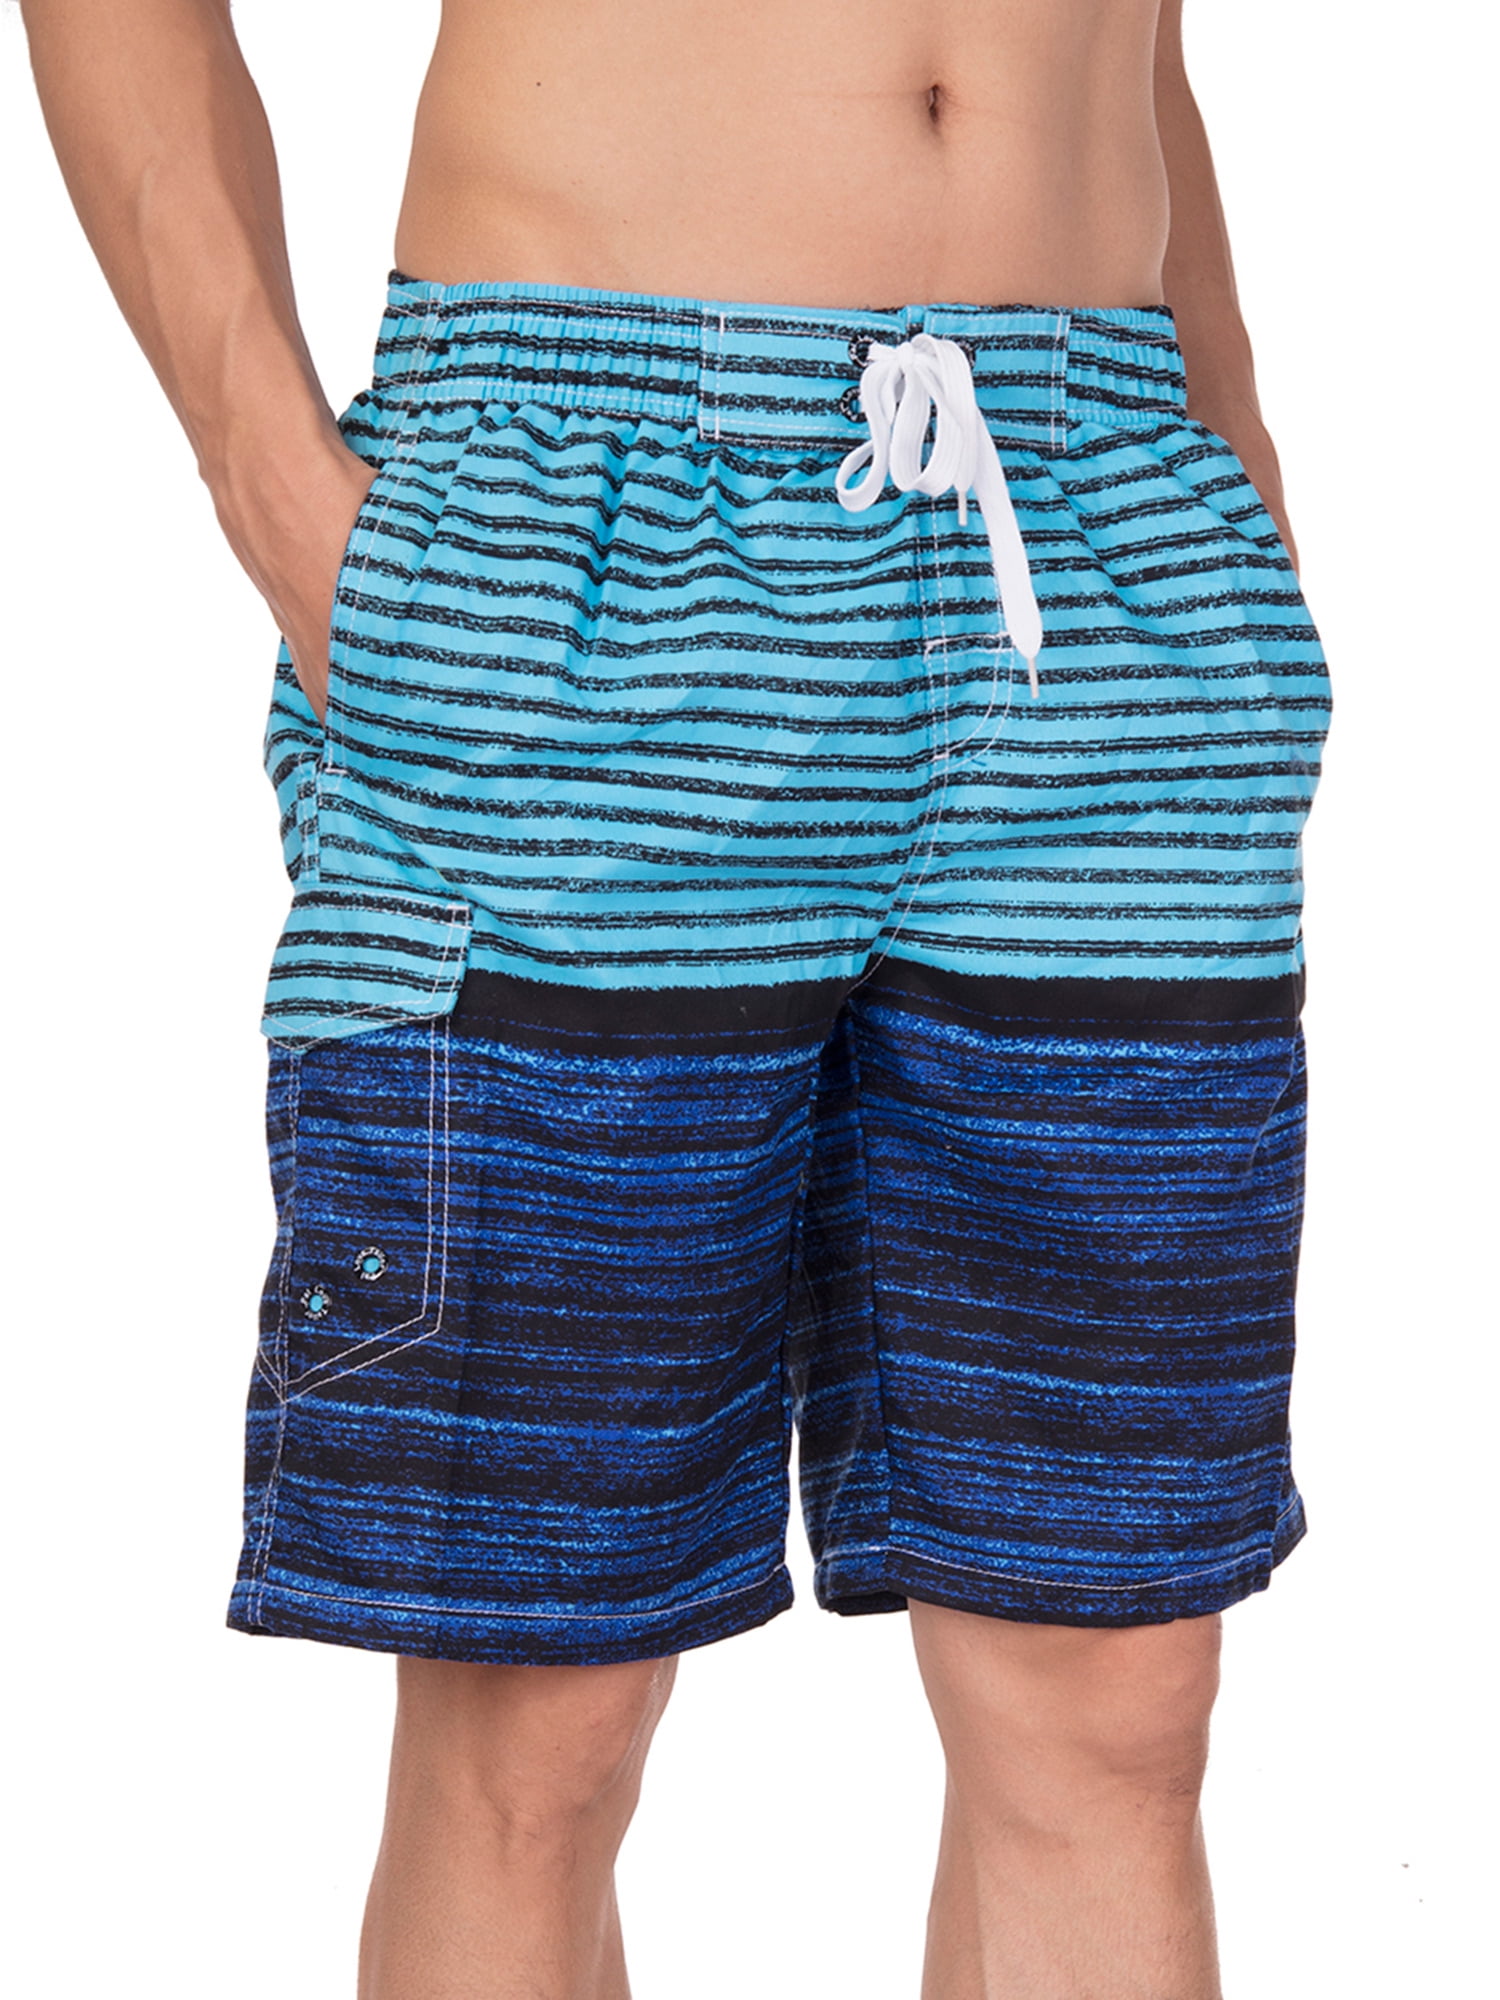 Stripe Beach Shorts for Men's Beachwear Swim Trunks Pants Swimwear ...